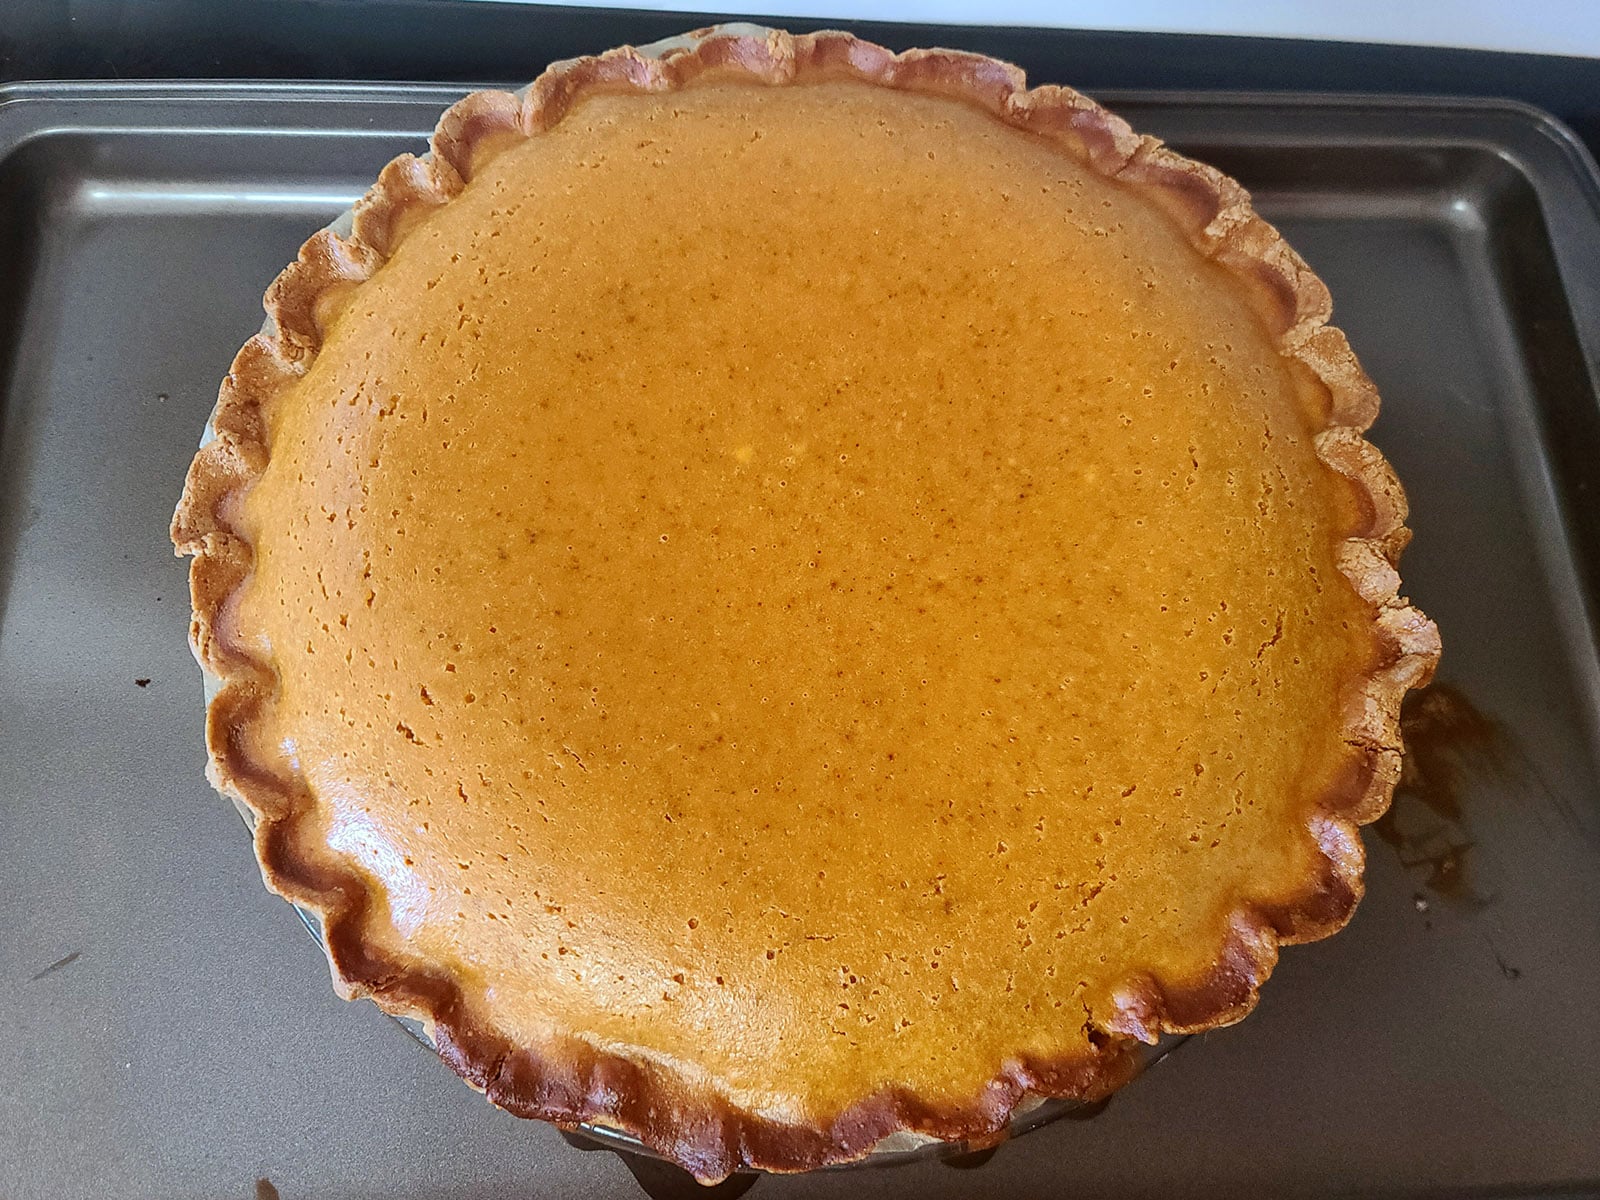 A puffy, freshly baked gluten free pumpkin pie.